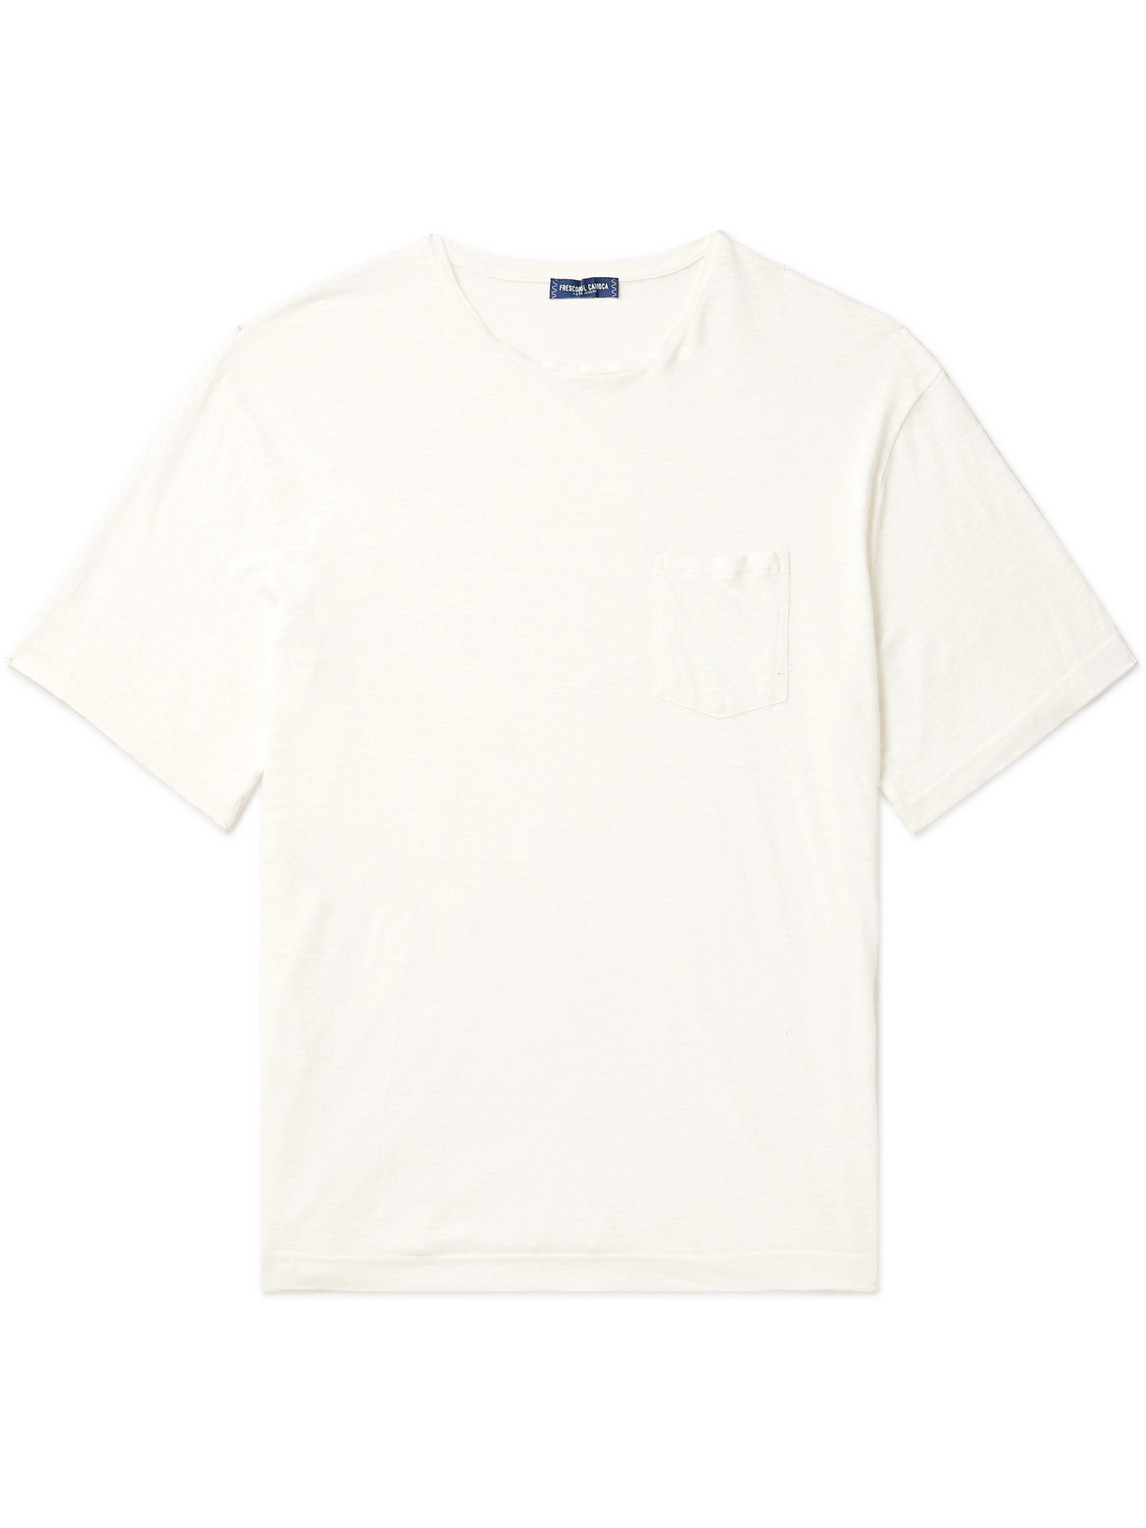 Frescobol Carioca - Carmo Linen T-Shirt - Men - White - M von Frescobol Carioca